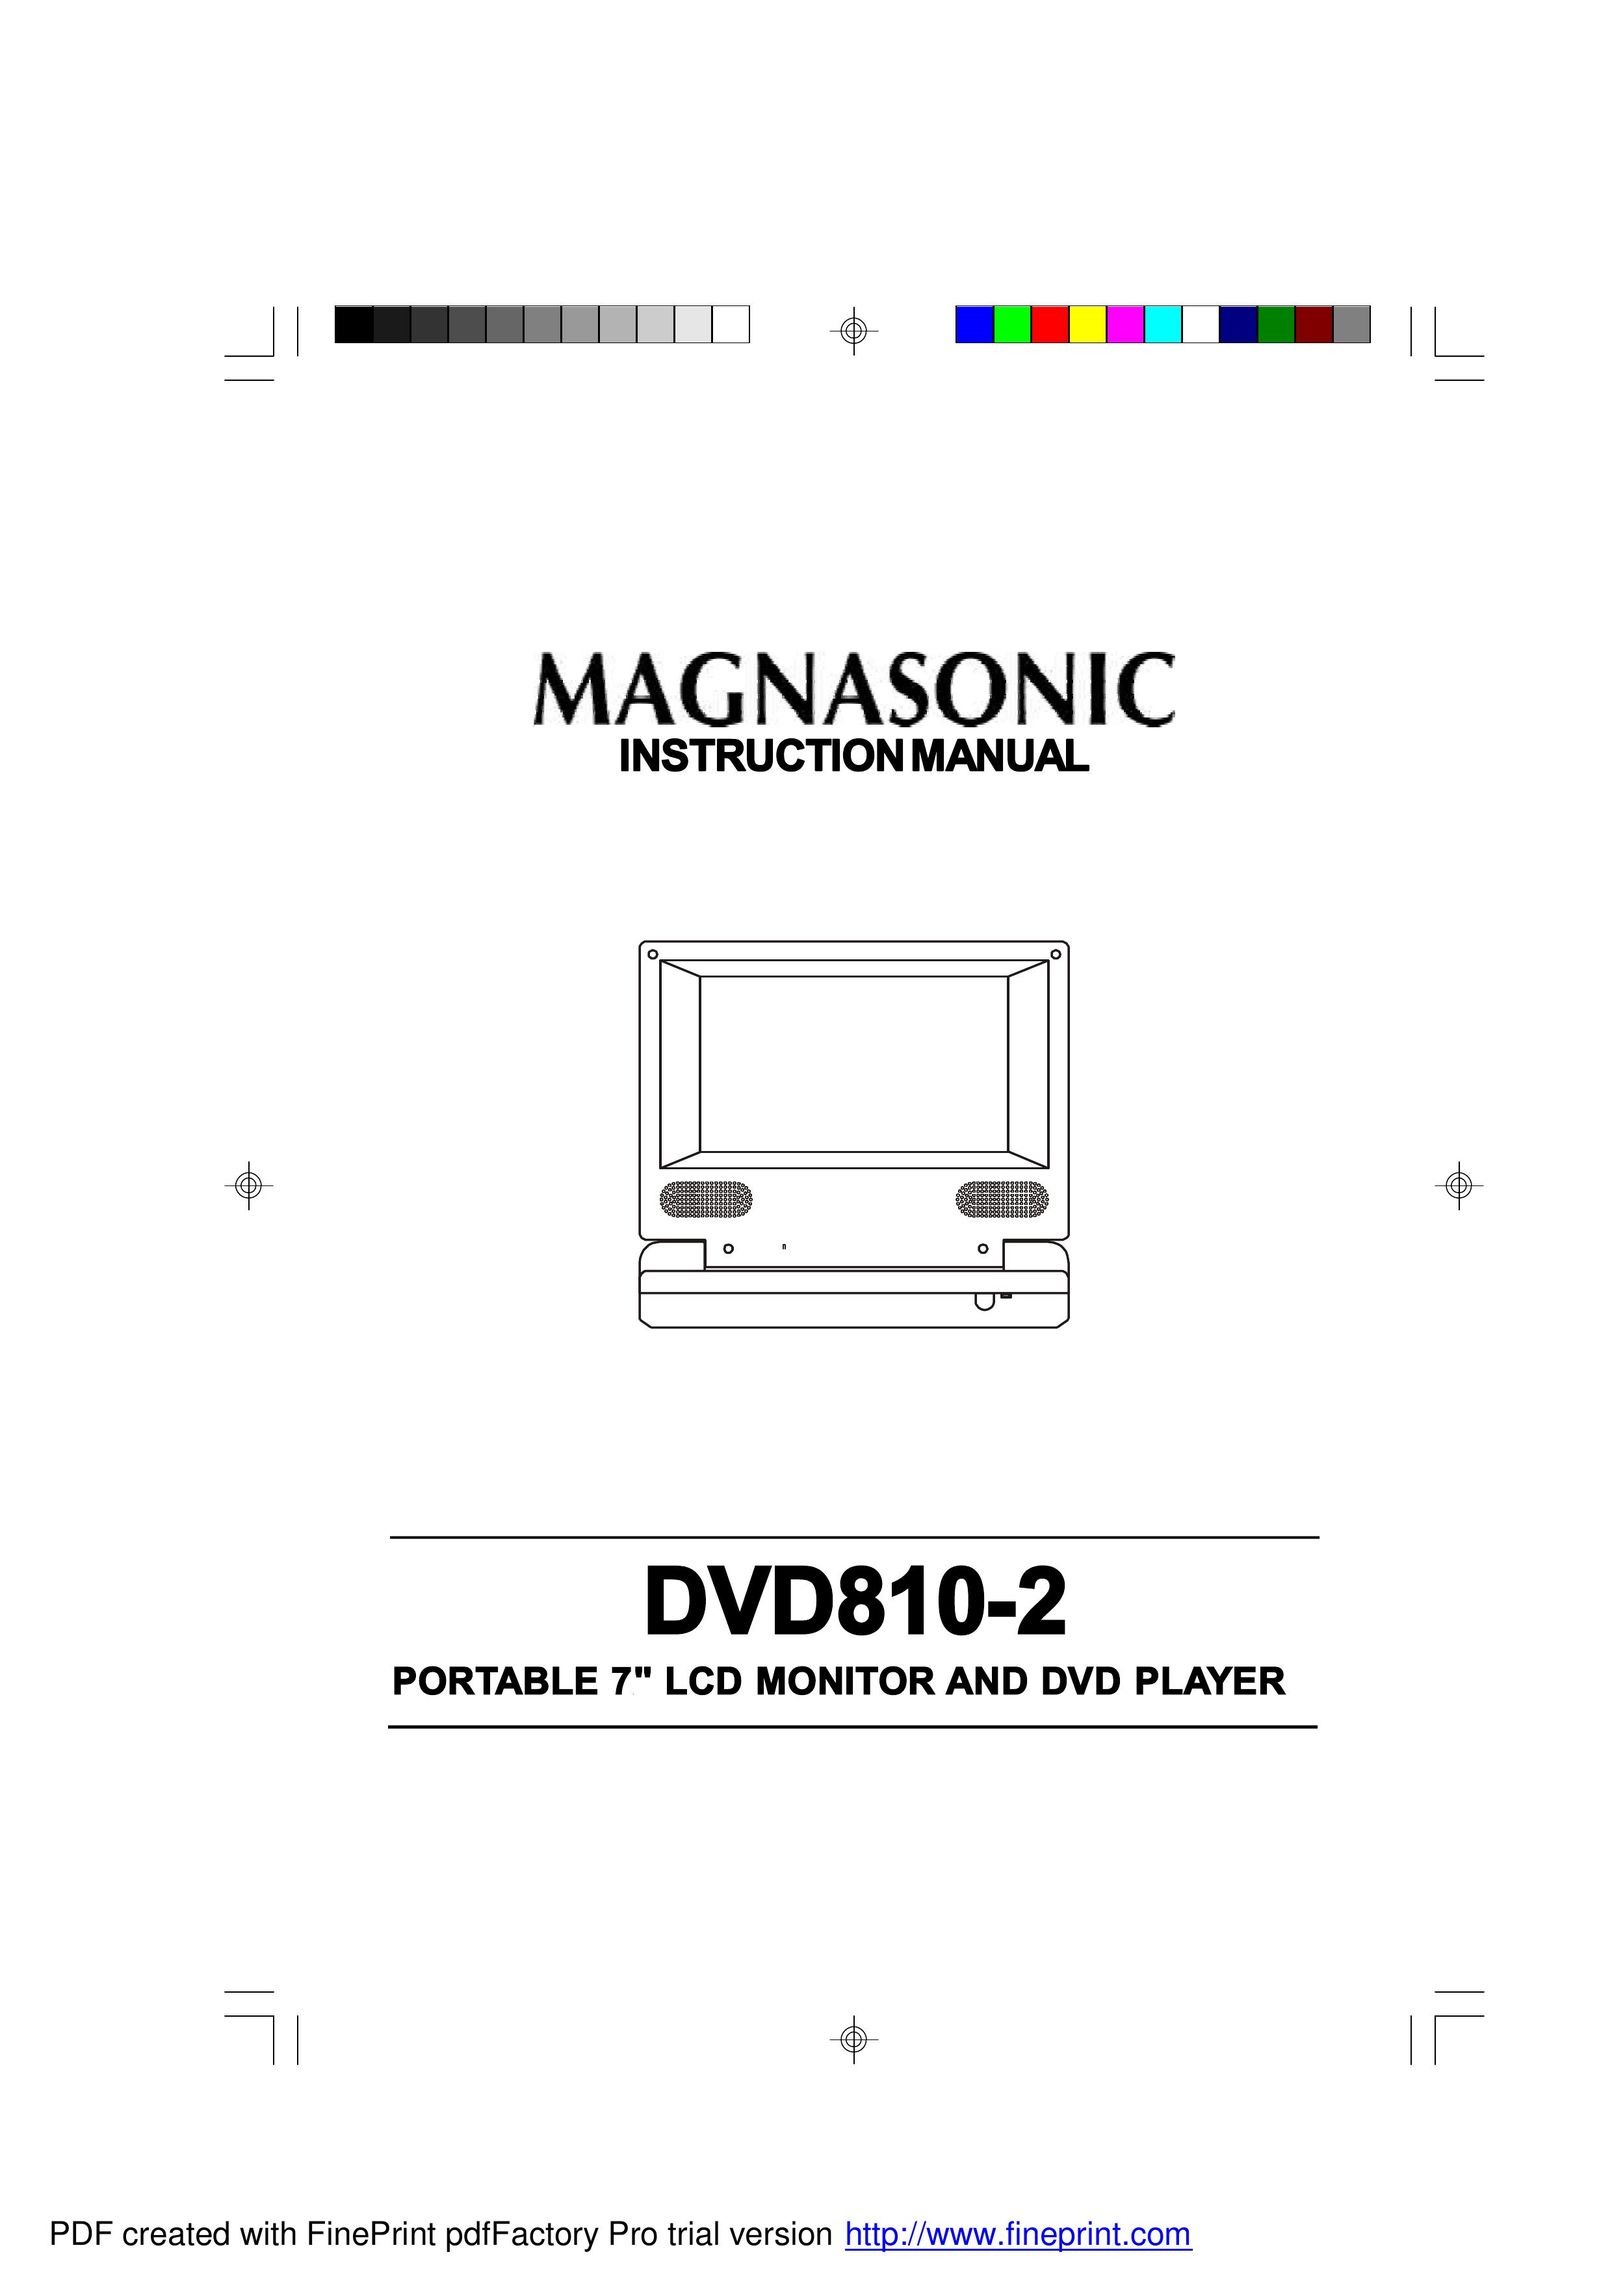 Magnasonic DVD810-2 Portable DVD Player User Manual